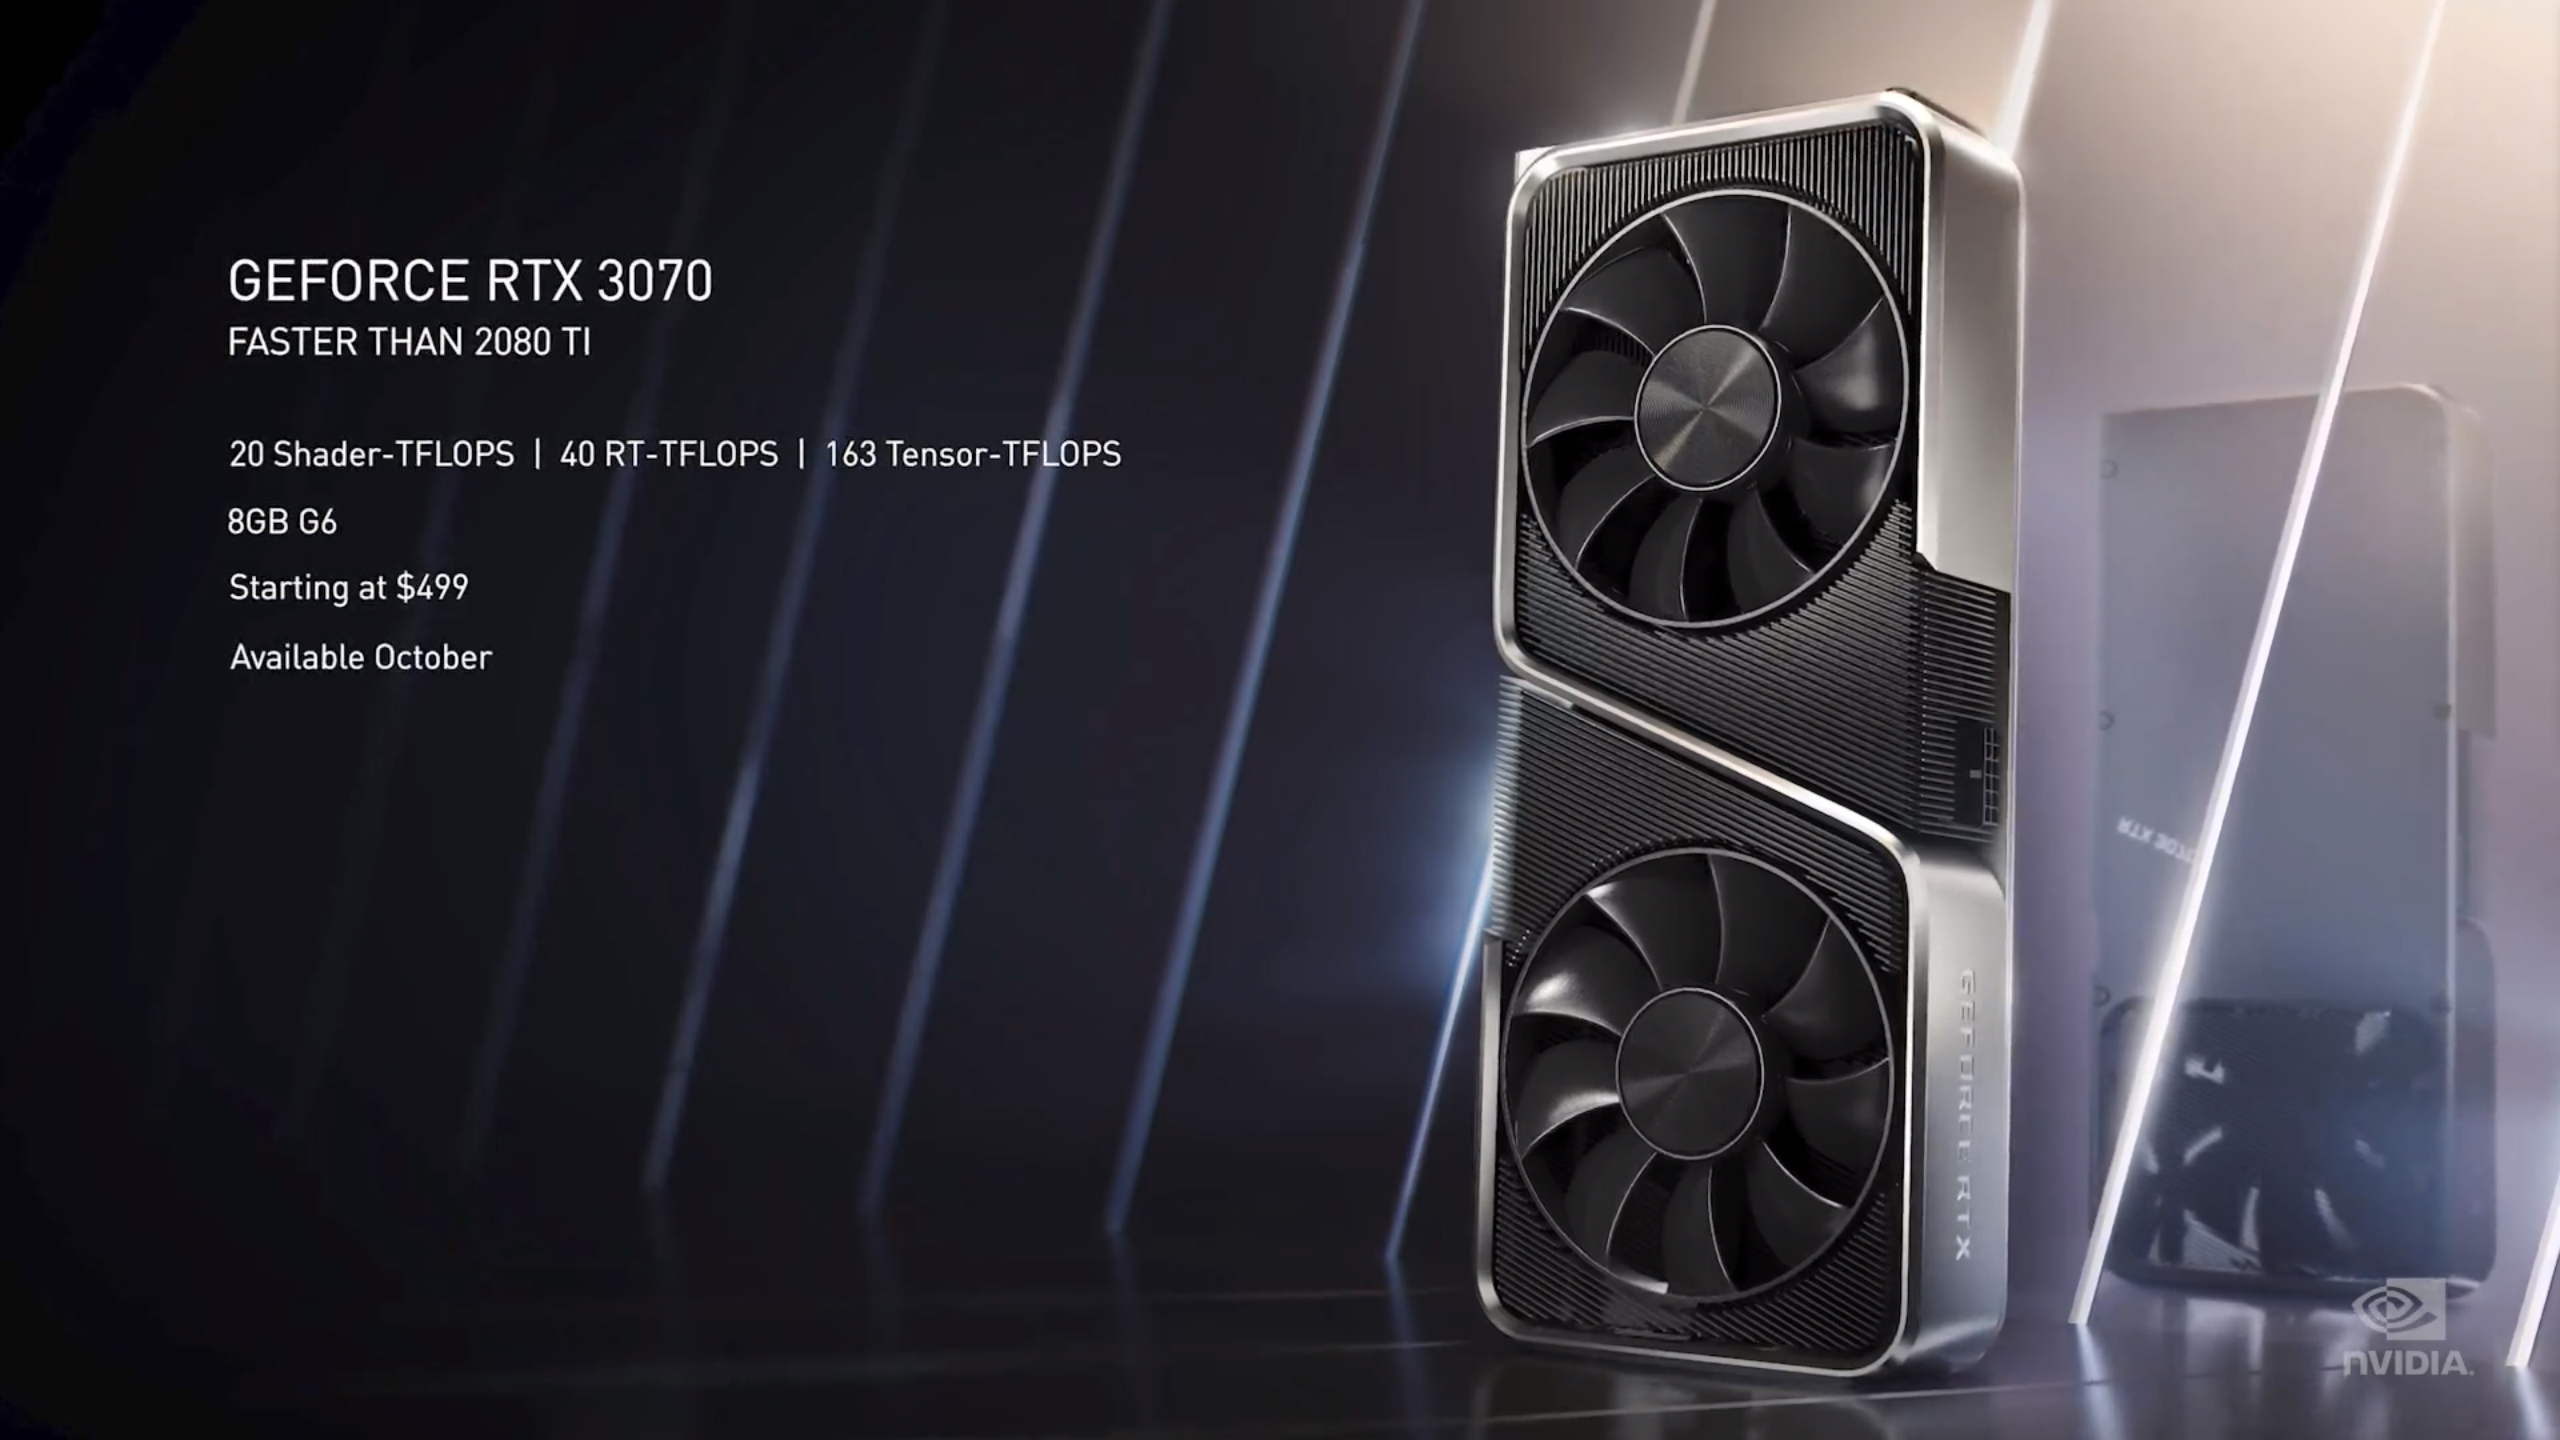 Nvidia GeForce RTX 3070 specs